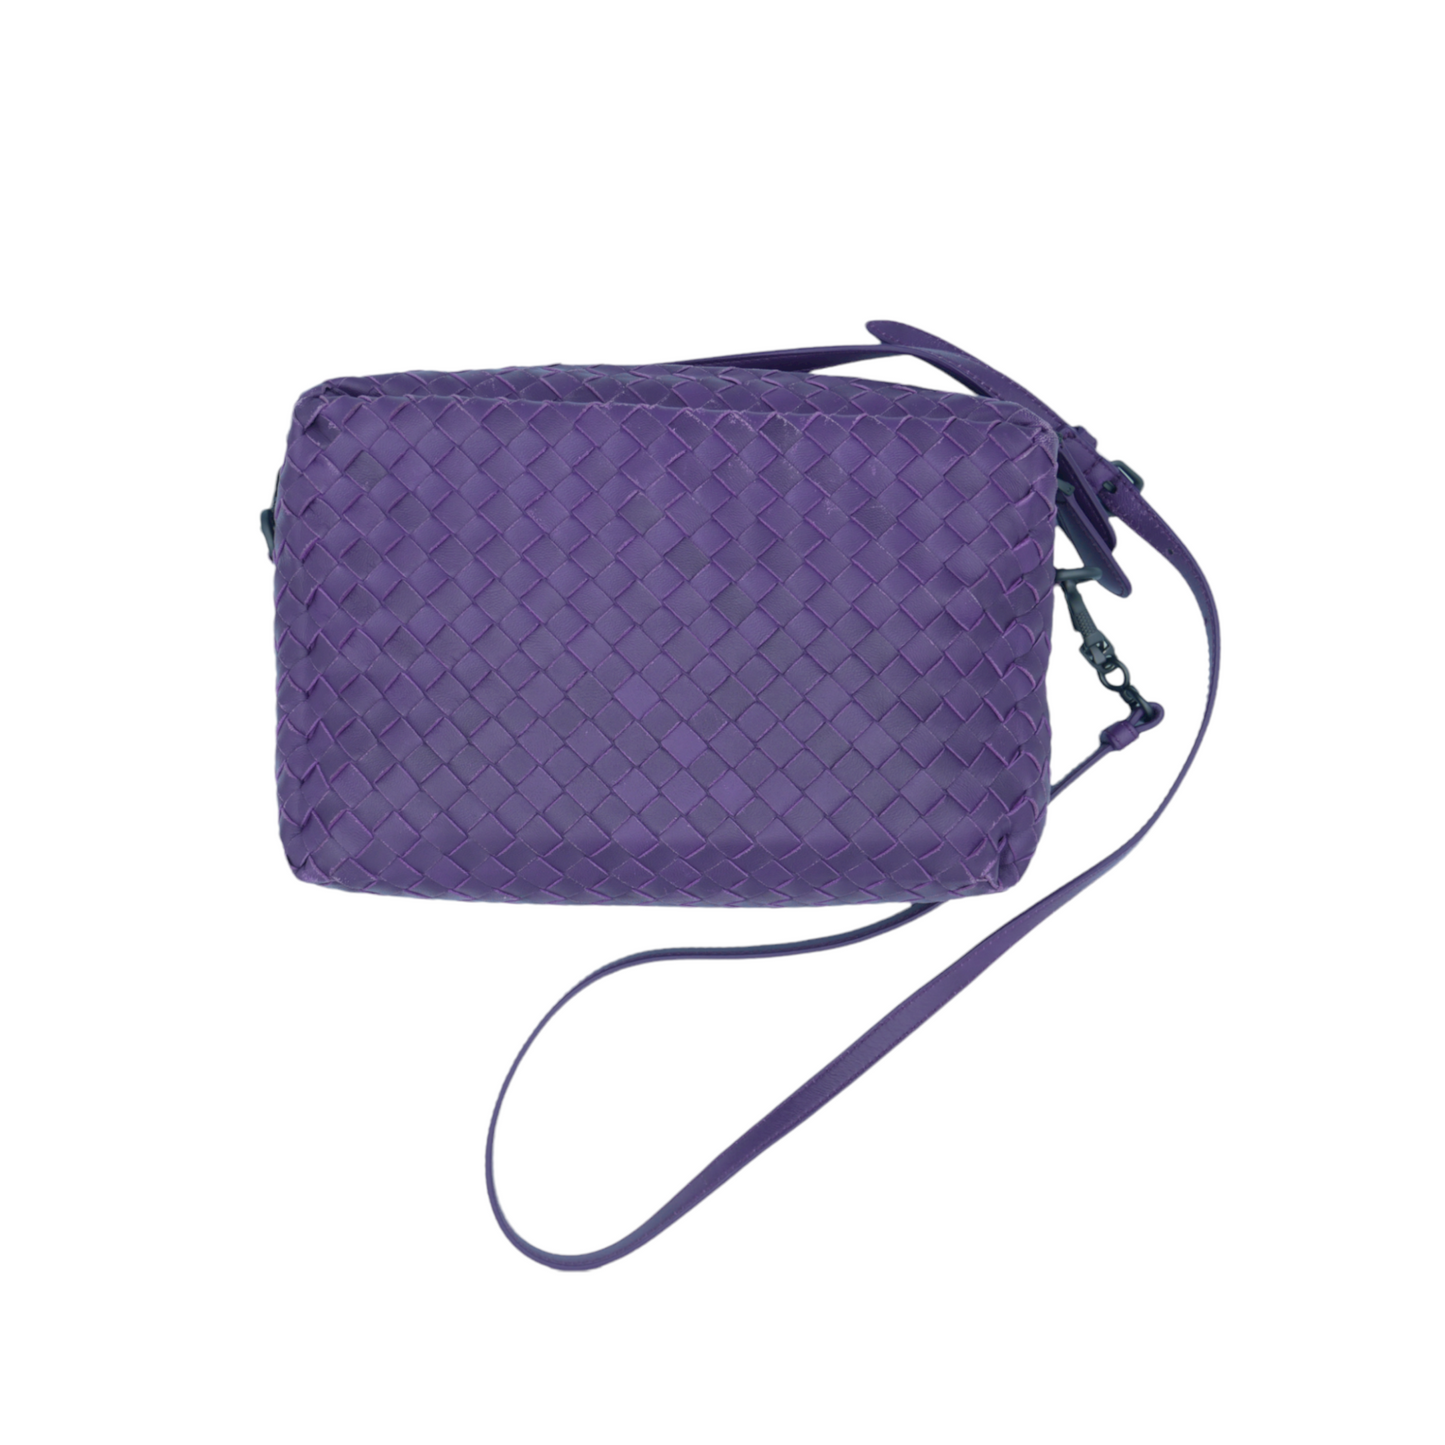 Bottega Veneta purple bag